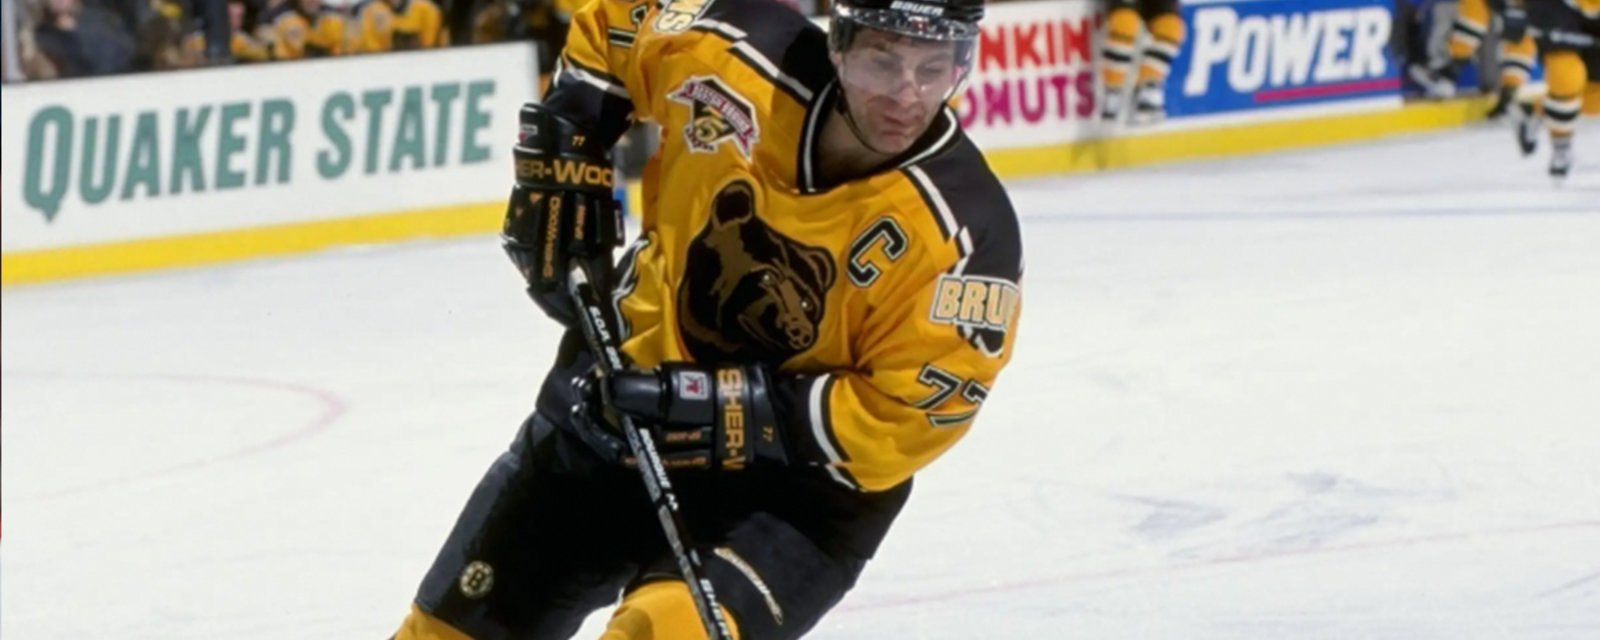 Matt Grzelcyk urges the Bruins to bring back the “Pooh Bear” jersey for 2020-21